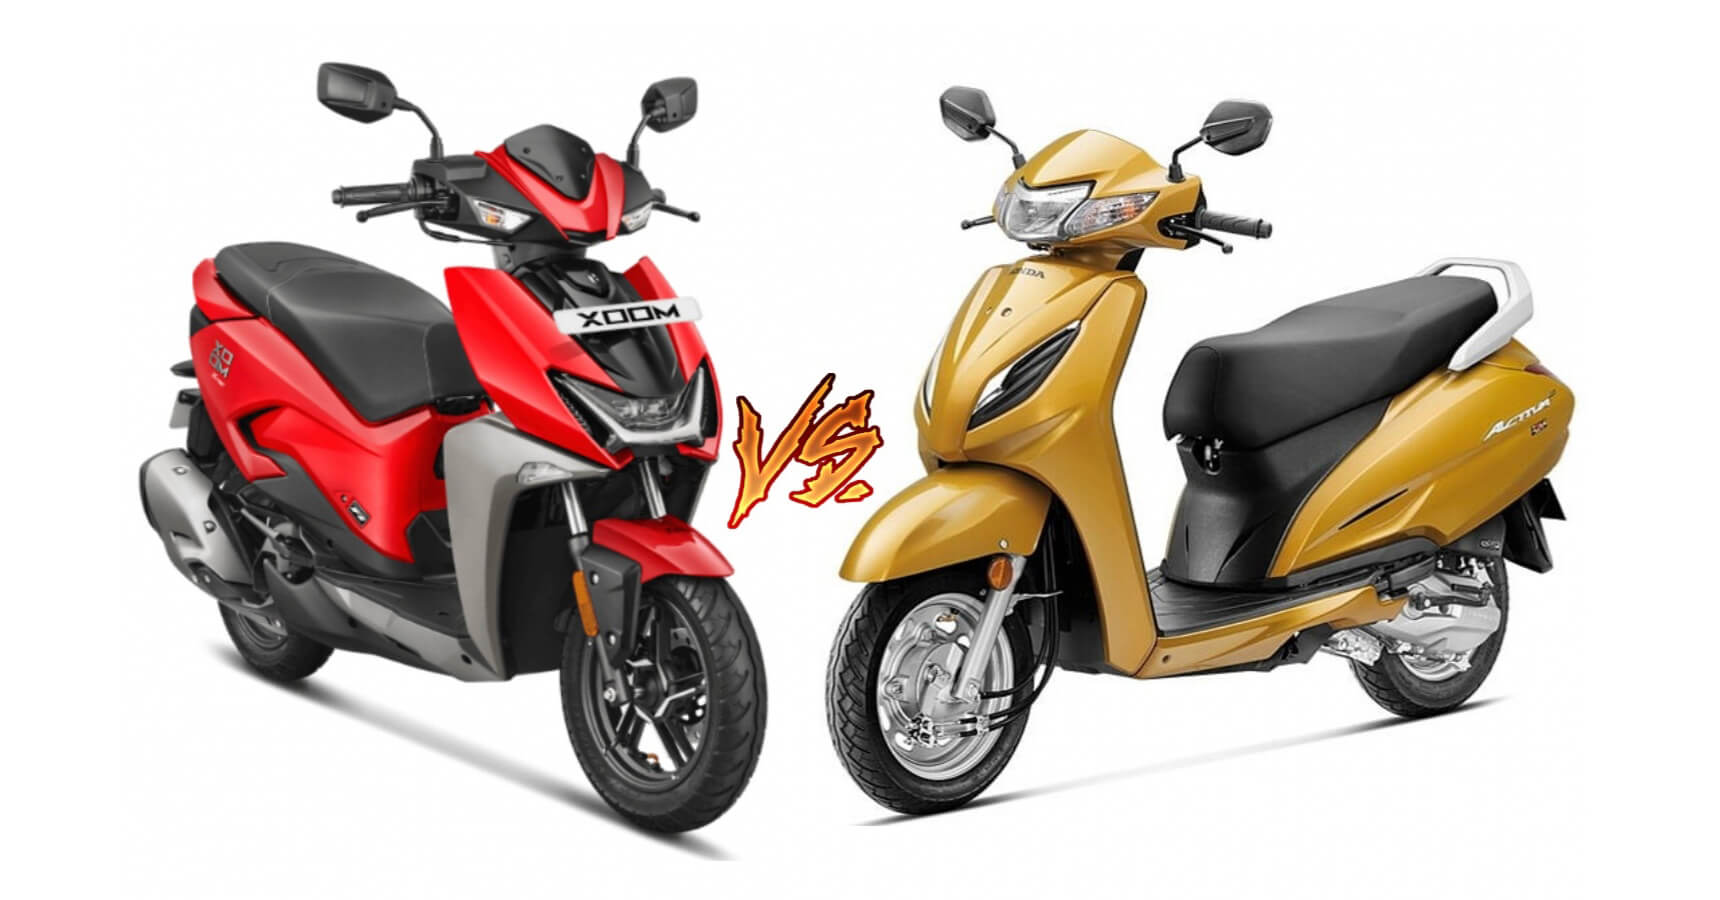 Honda Activa H-Smart vs Hero Xoom Comparison